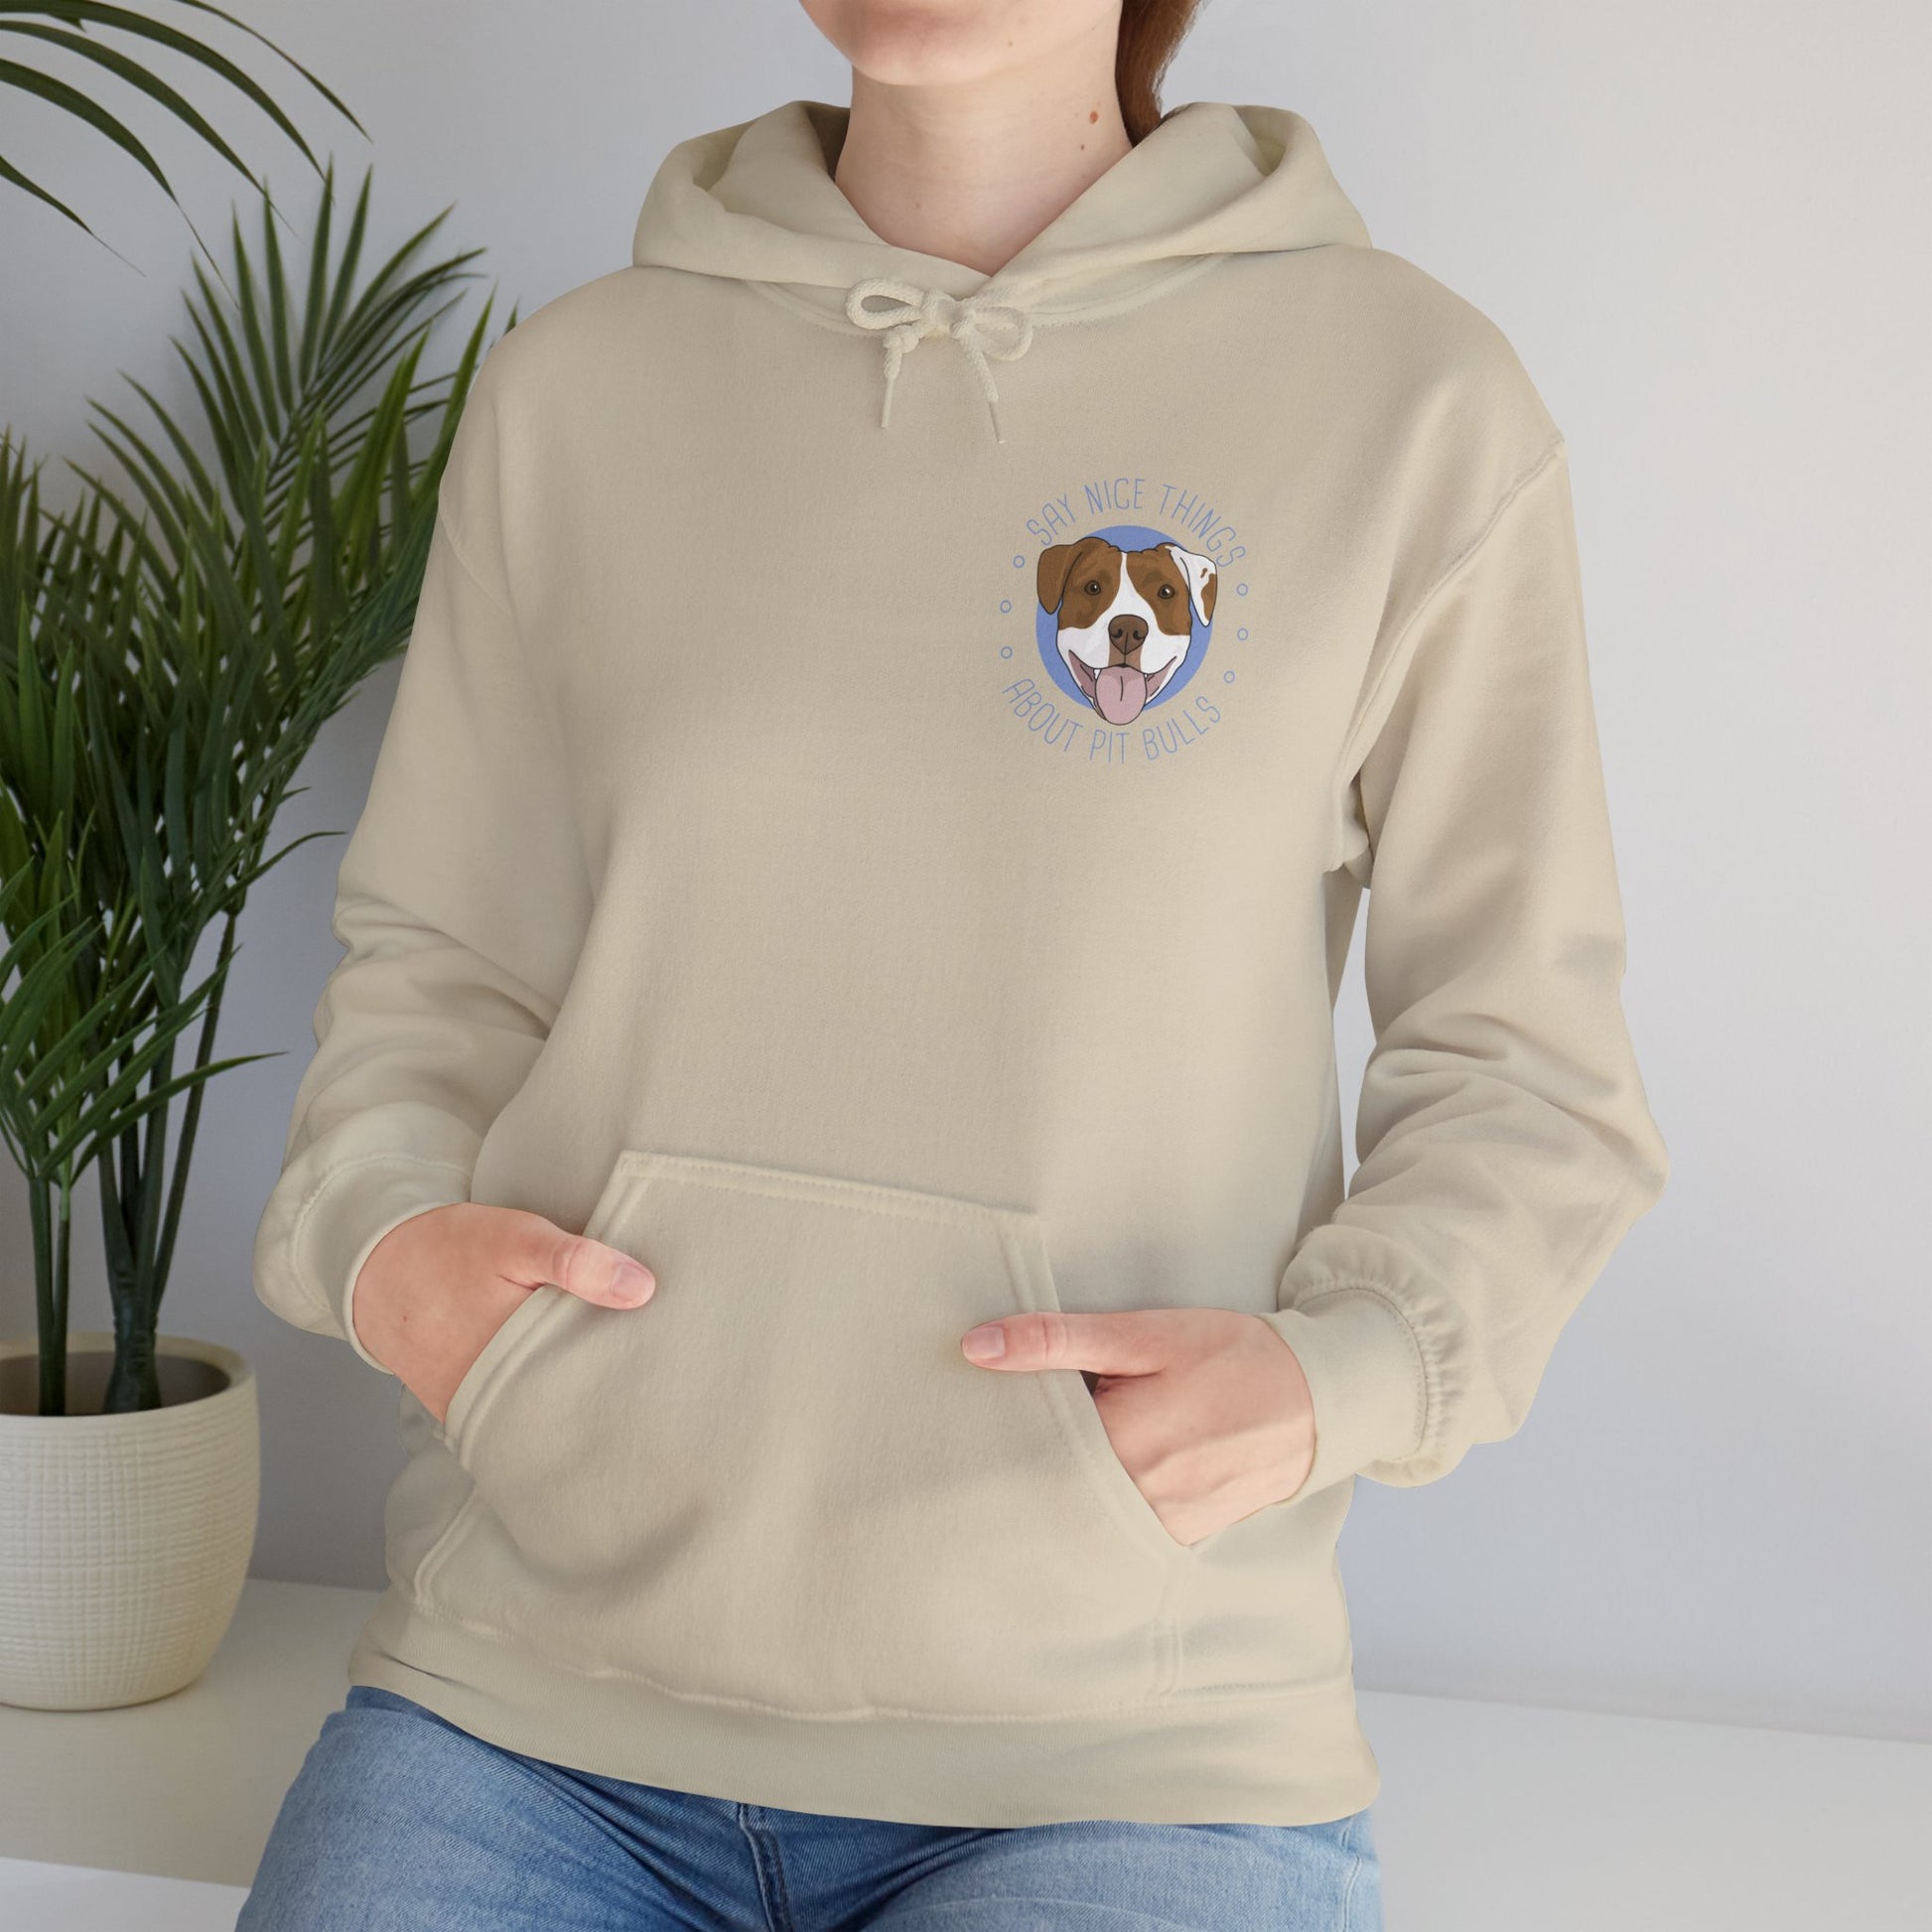 Say Nice Things About Pit Bulls | Pocket Print | Hooded Sweatshirt - Detezi Designs-12142129986507825089